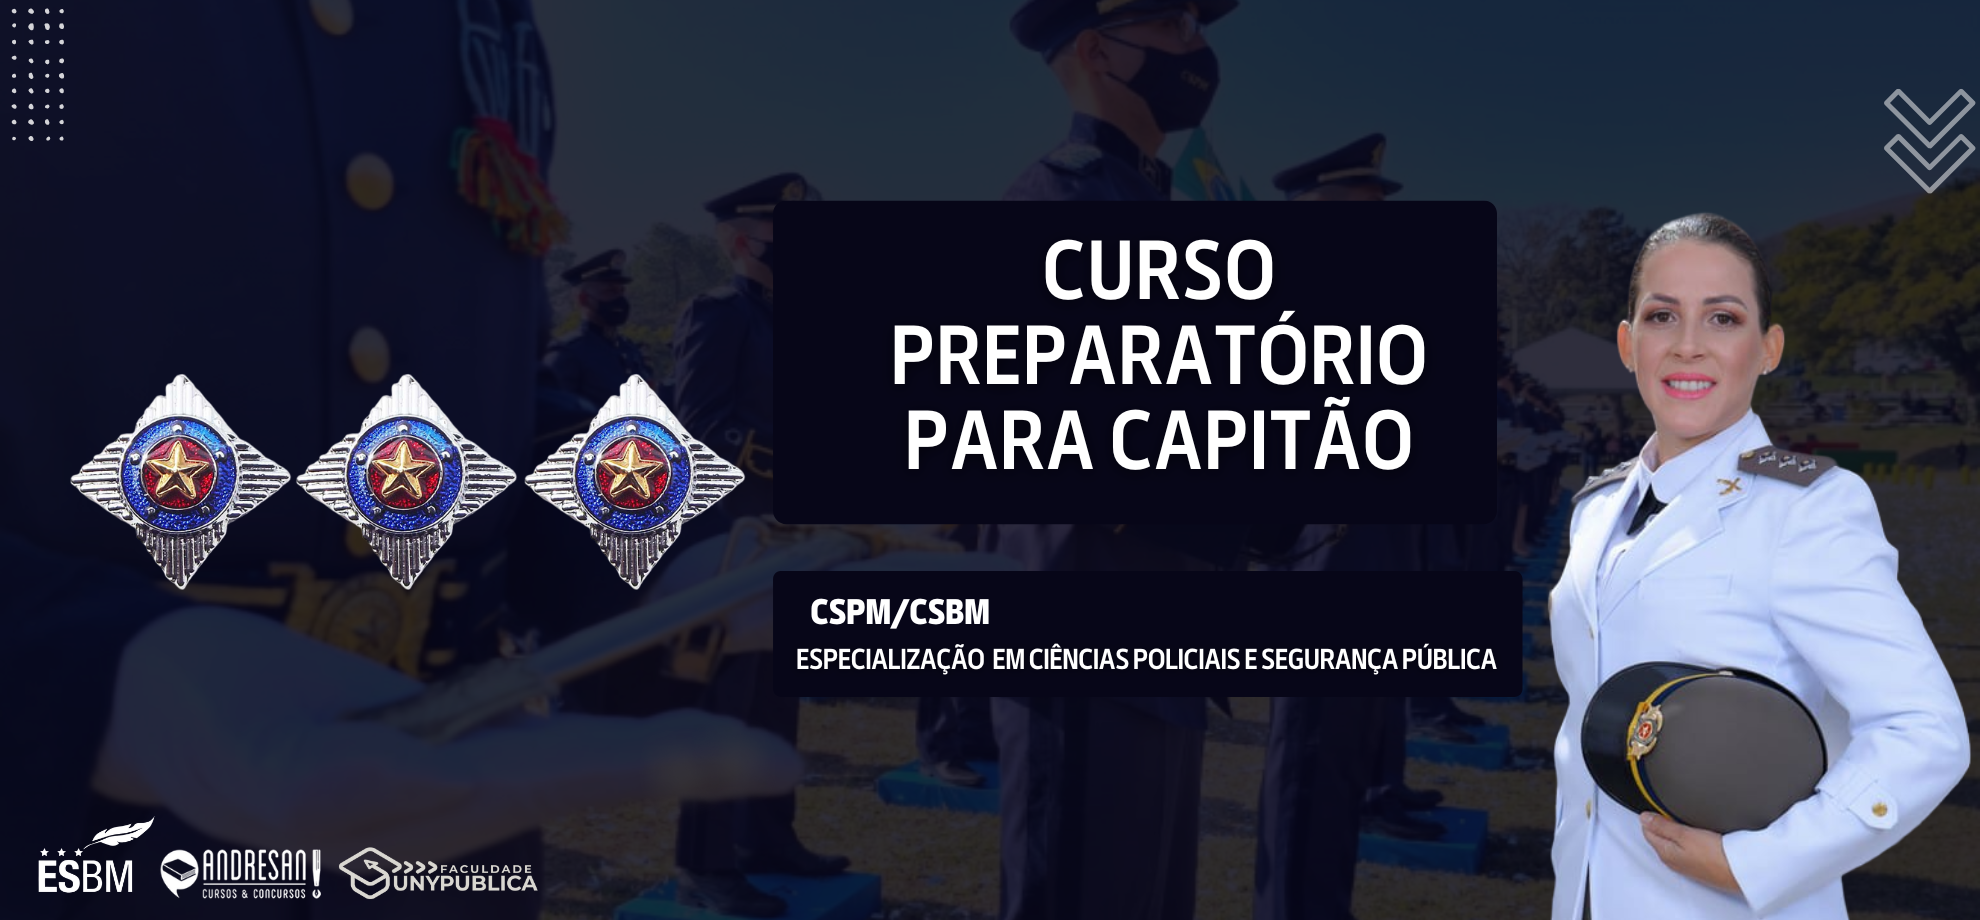 Asstbm Brigada Militar - #ASSTBM #IGPRS Parabéns, IGP-RS! https